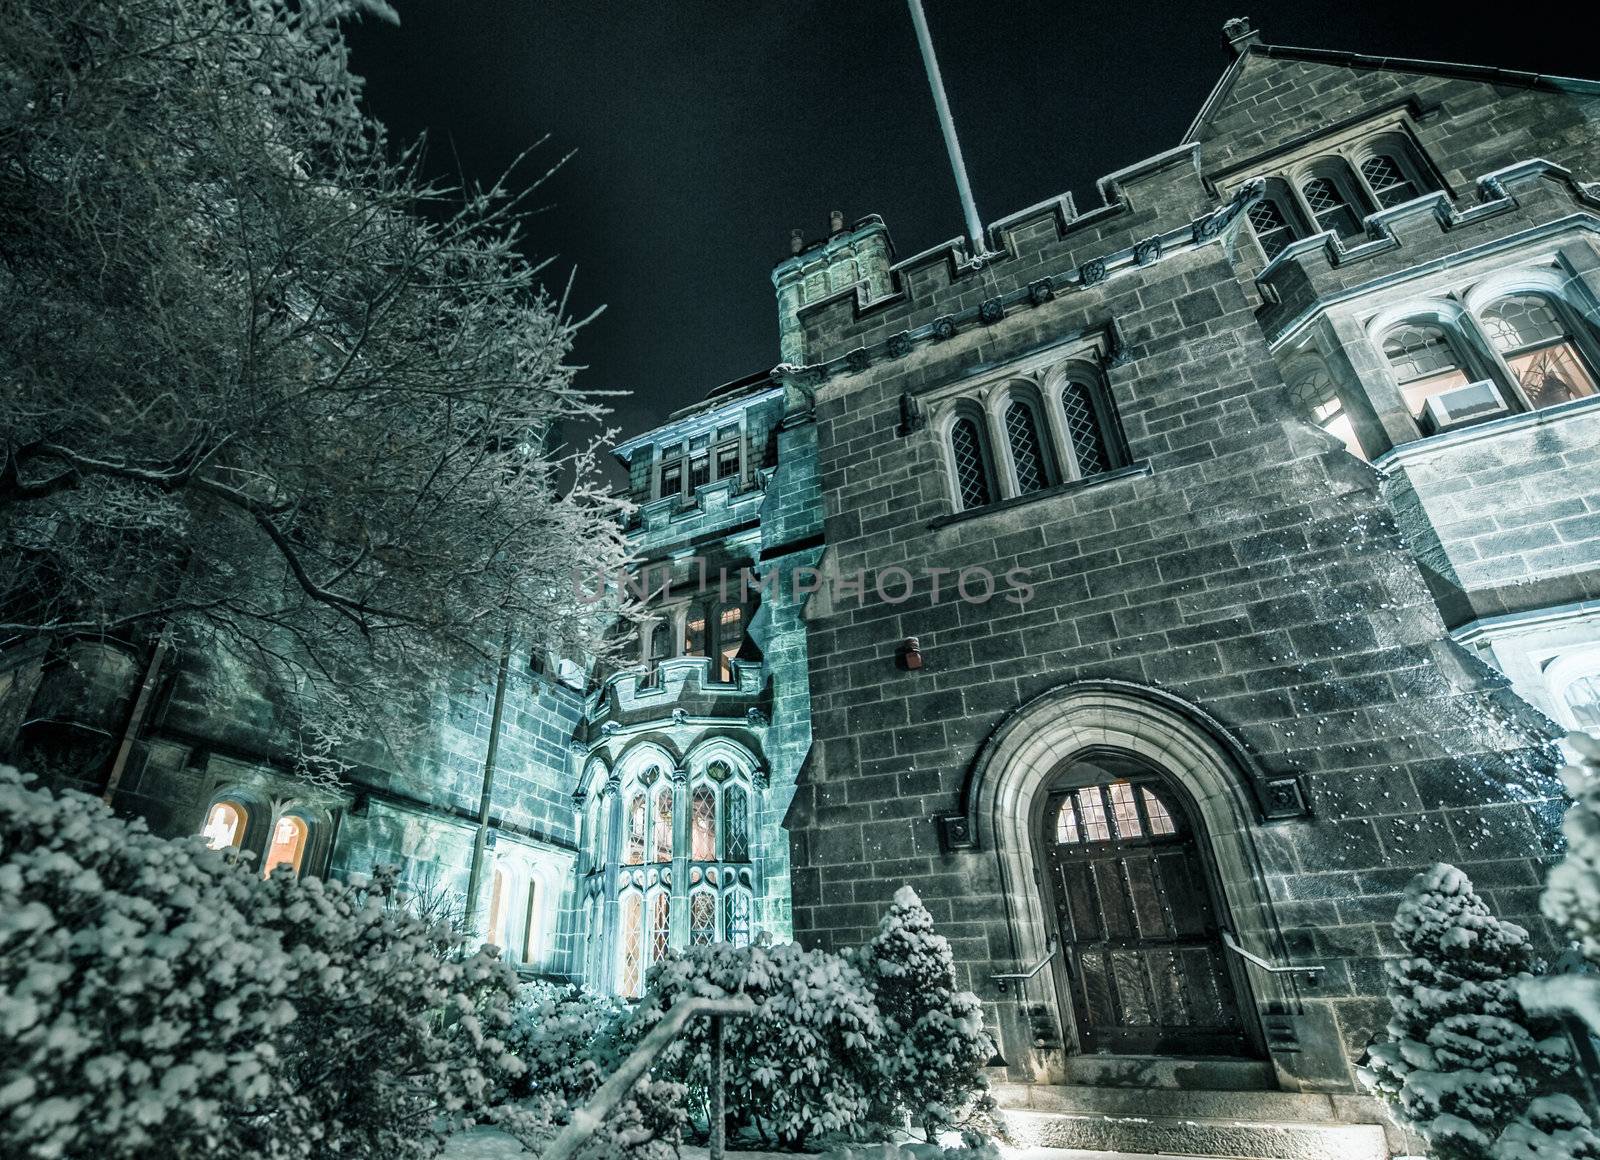 The Castle at Boston University by edan